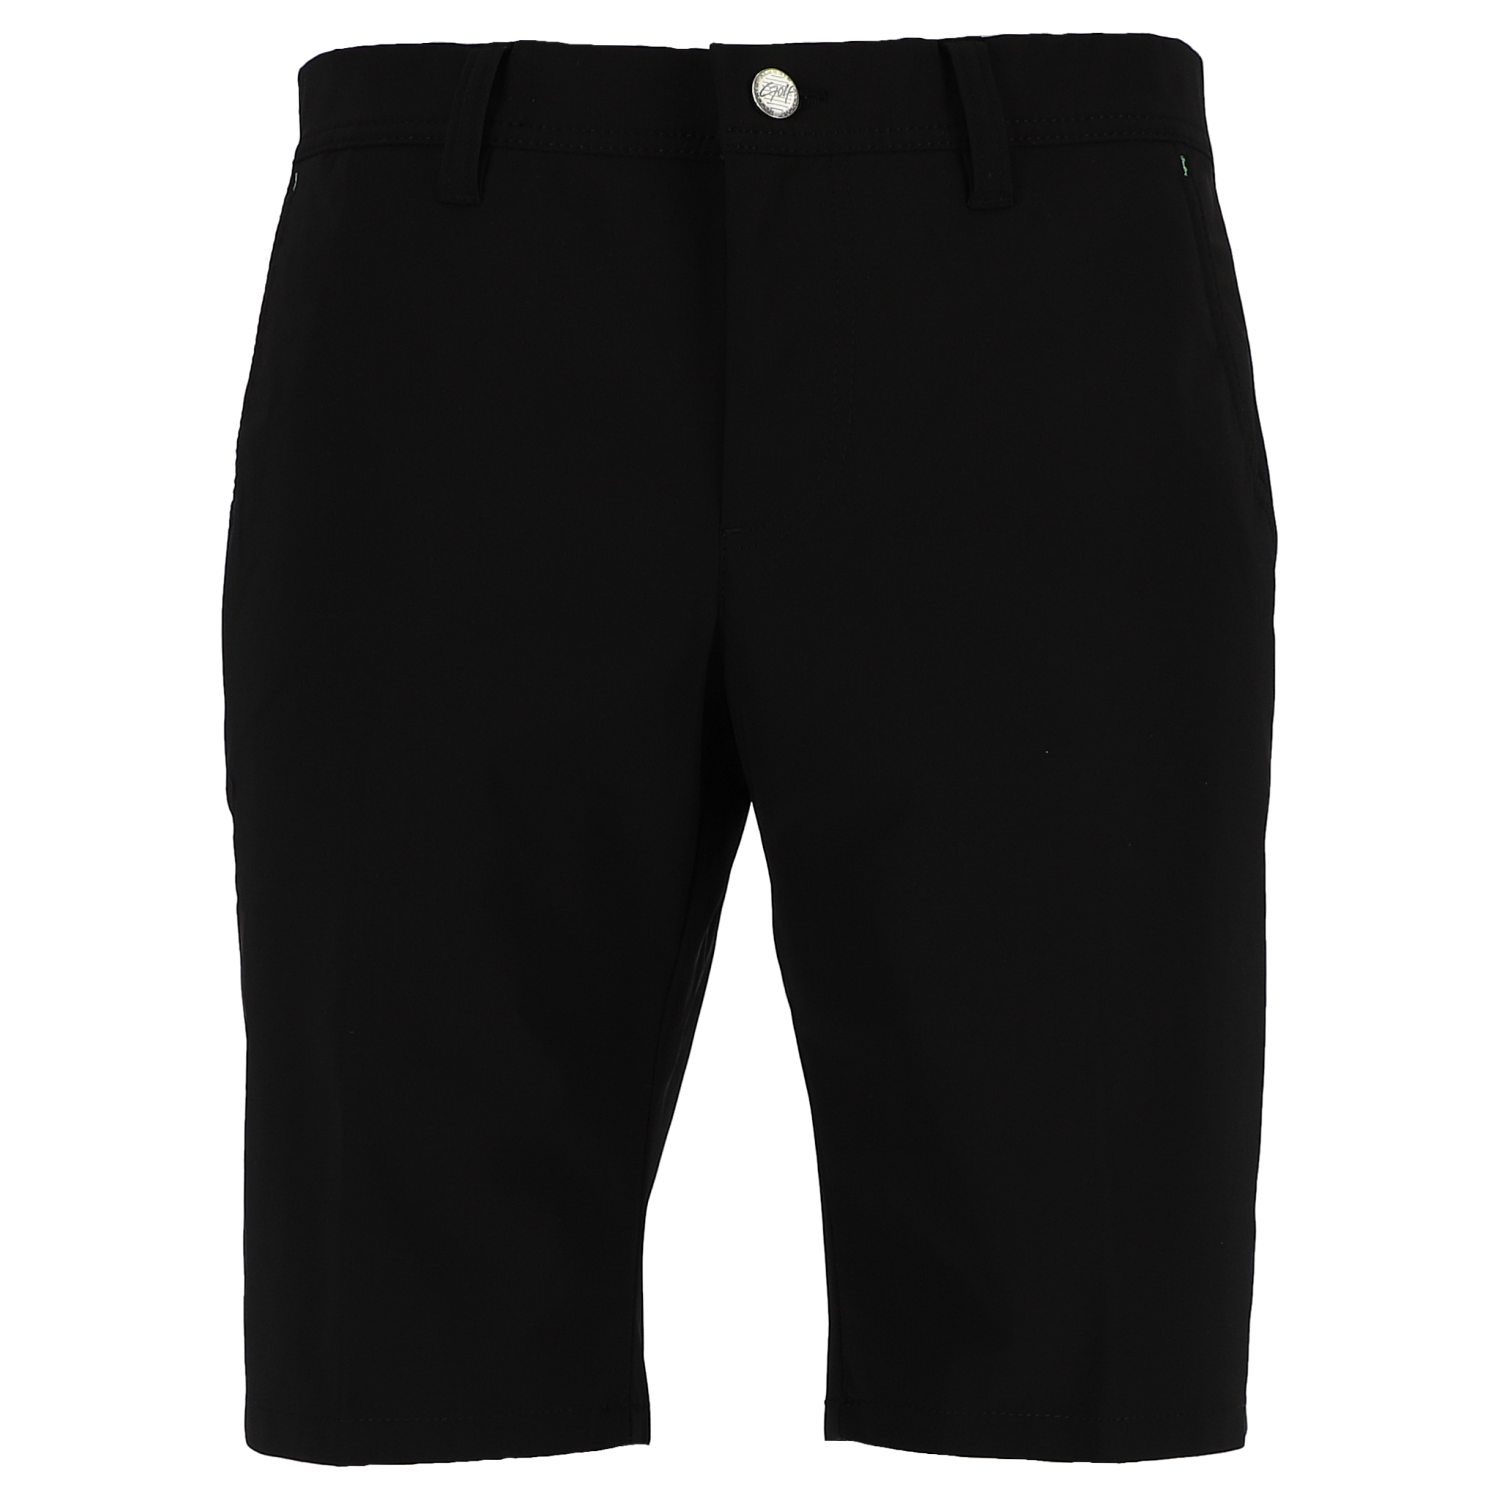 Alberto Earnie Wr Revolutional Shorts Black